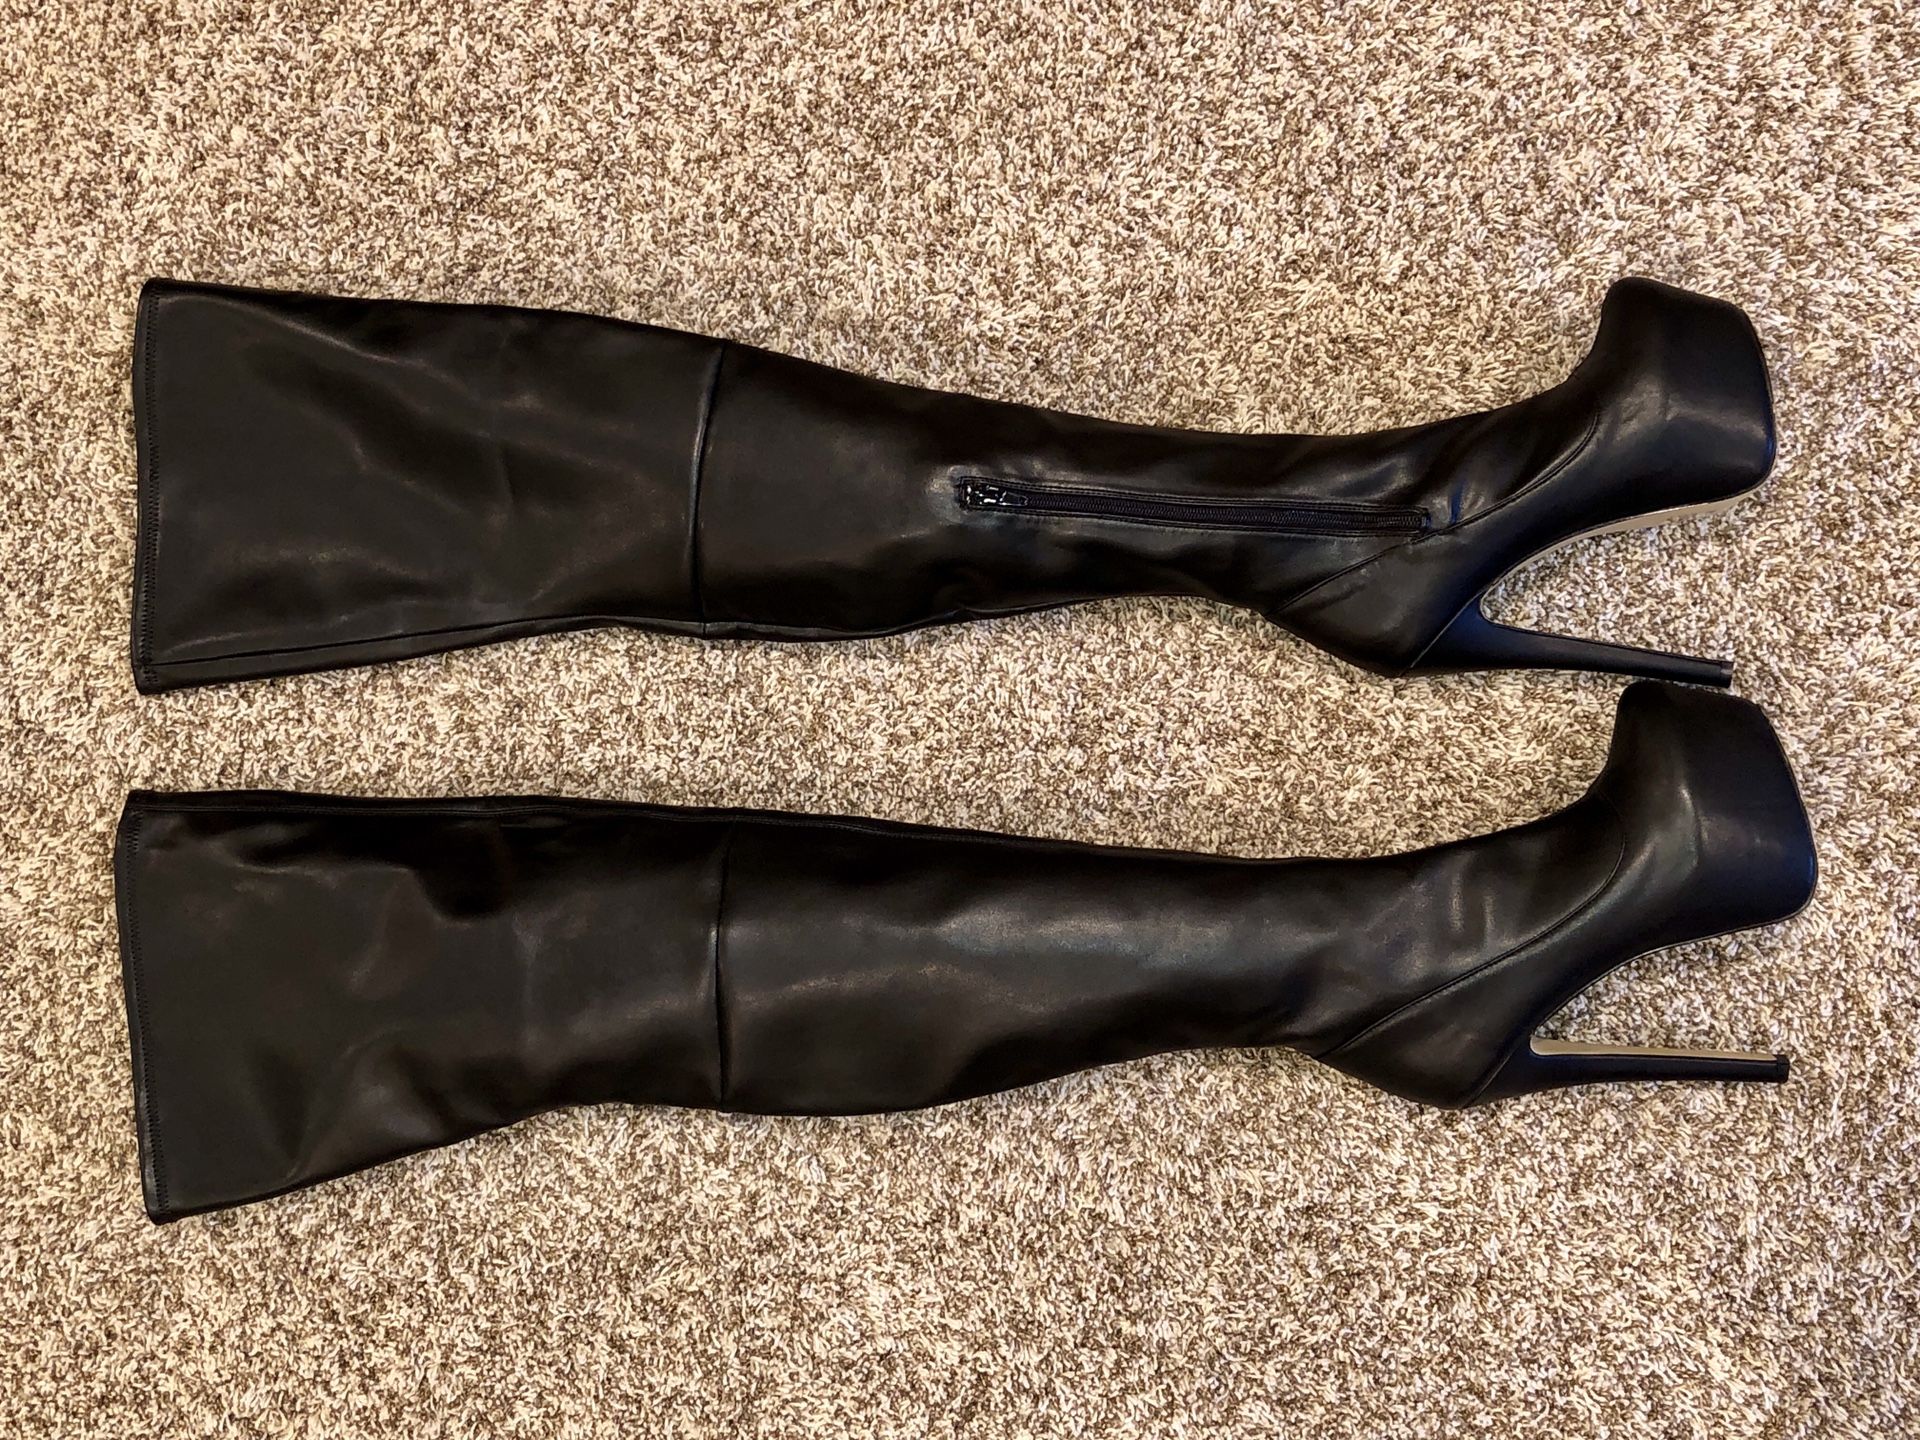 Bebe Tressa Thigh High Leather Platform Boots - black, size 8